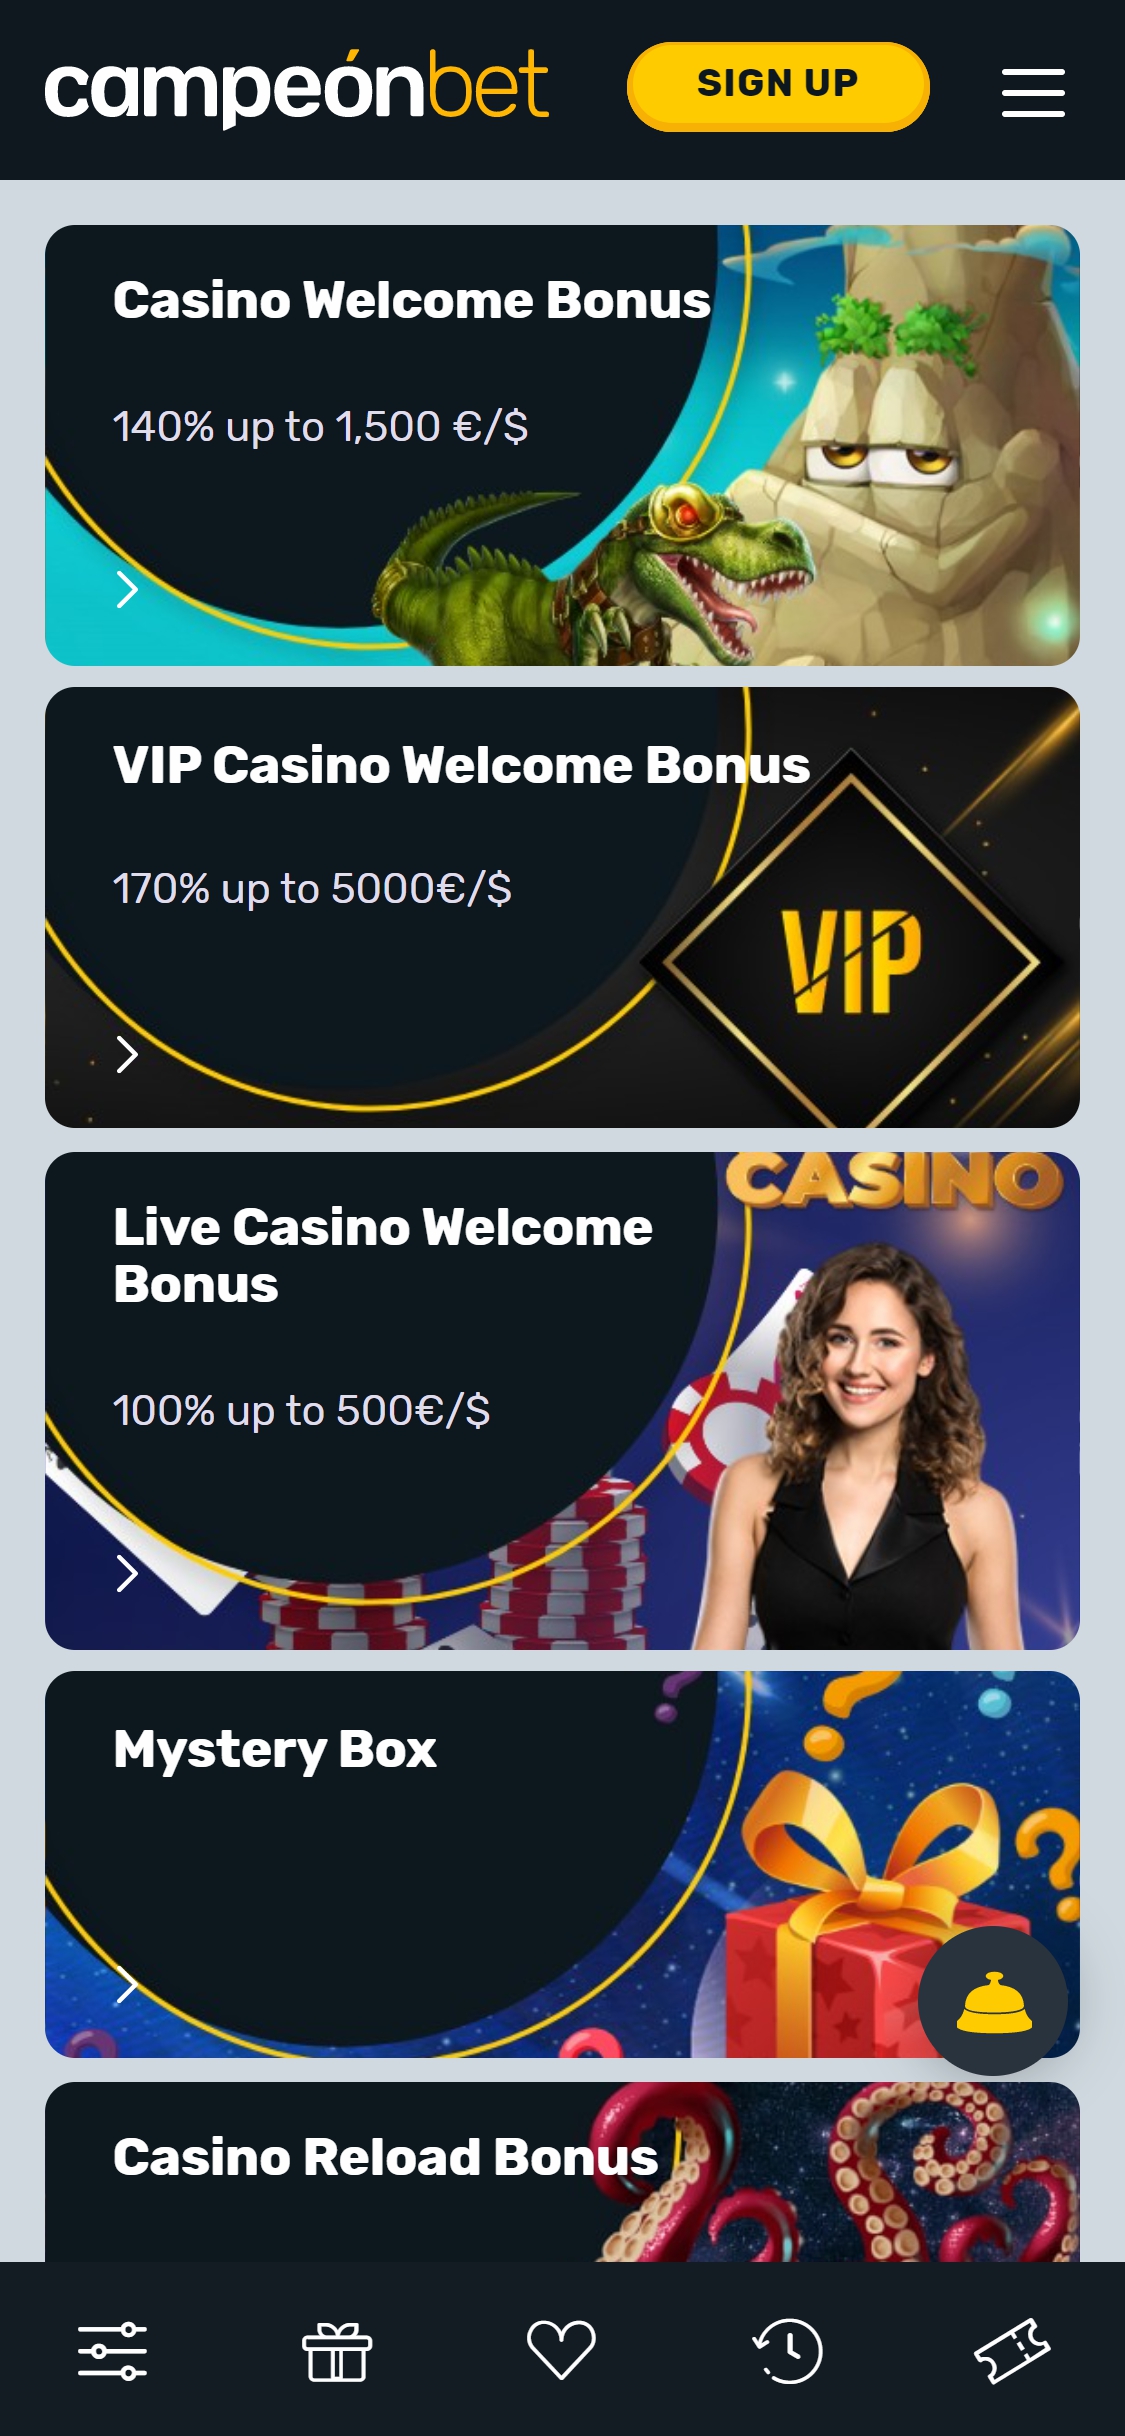 Campeon Bet Casino Mobile No Deposit Bonus Review